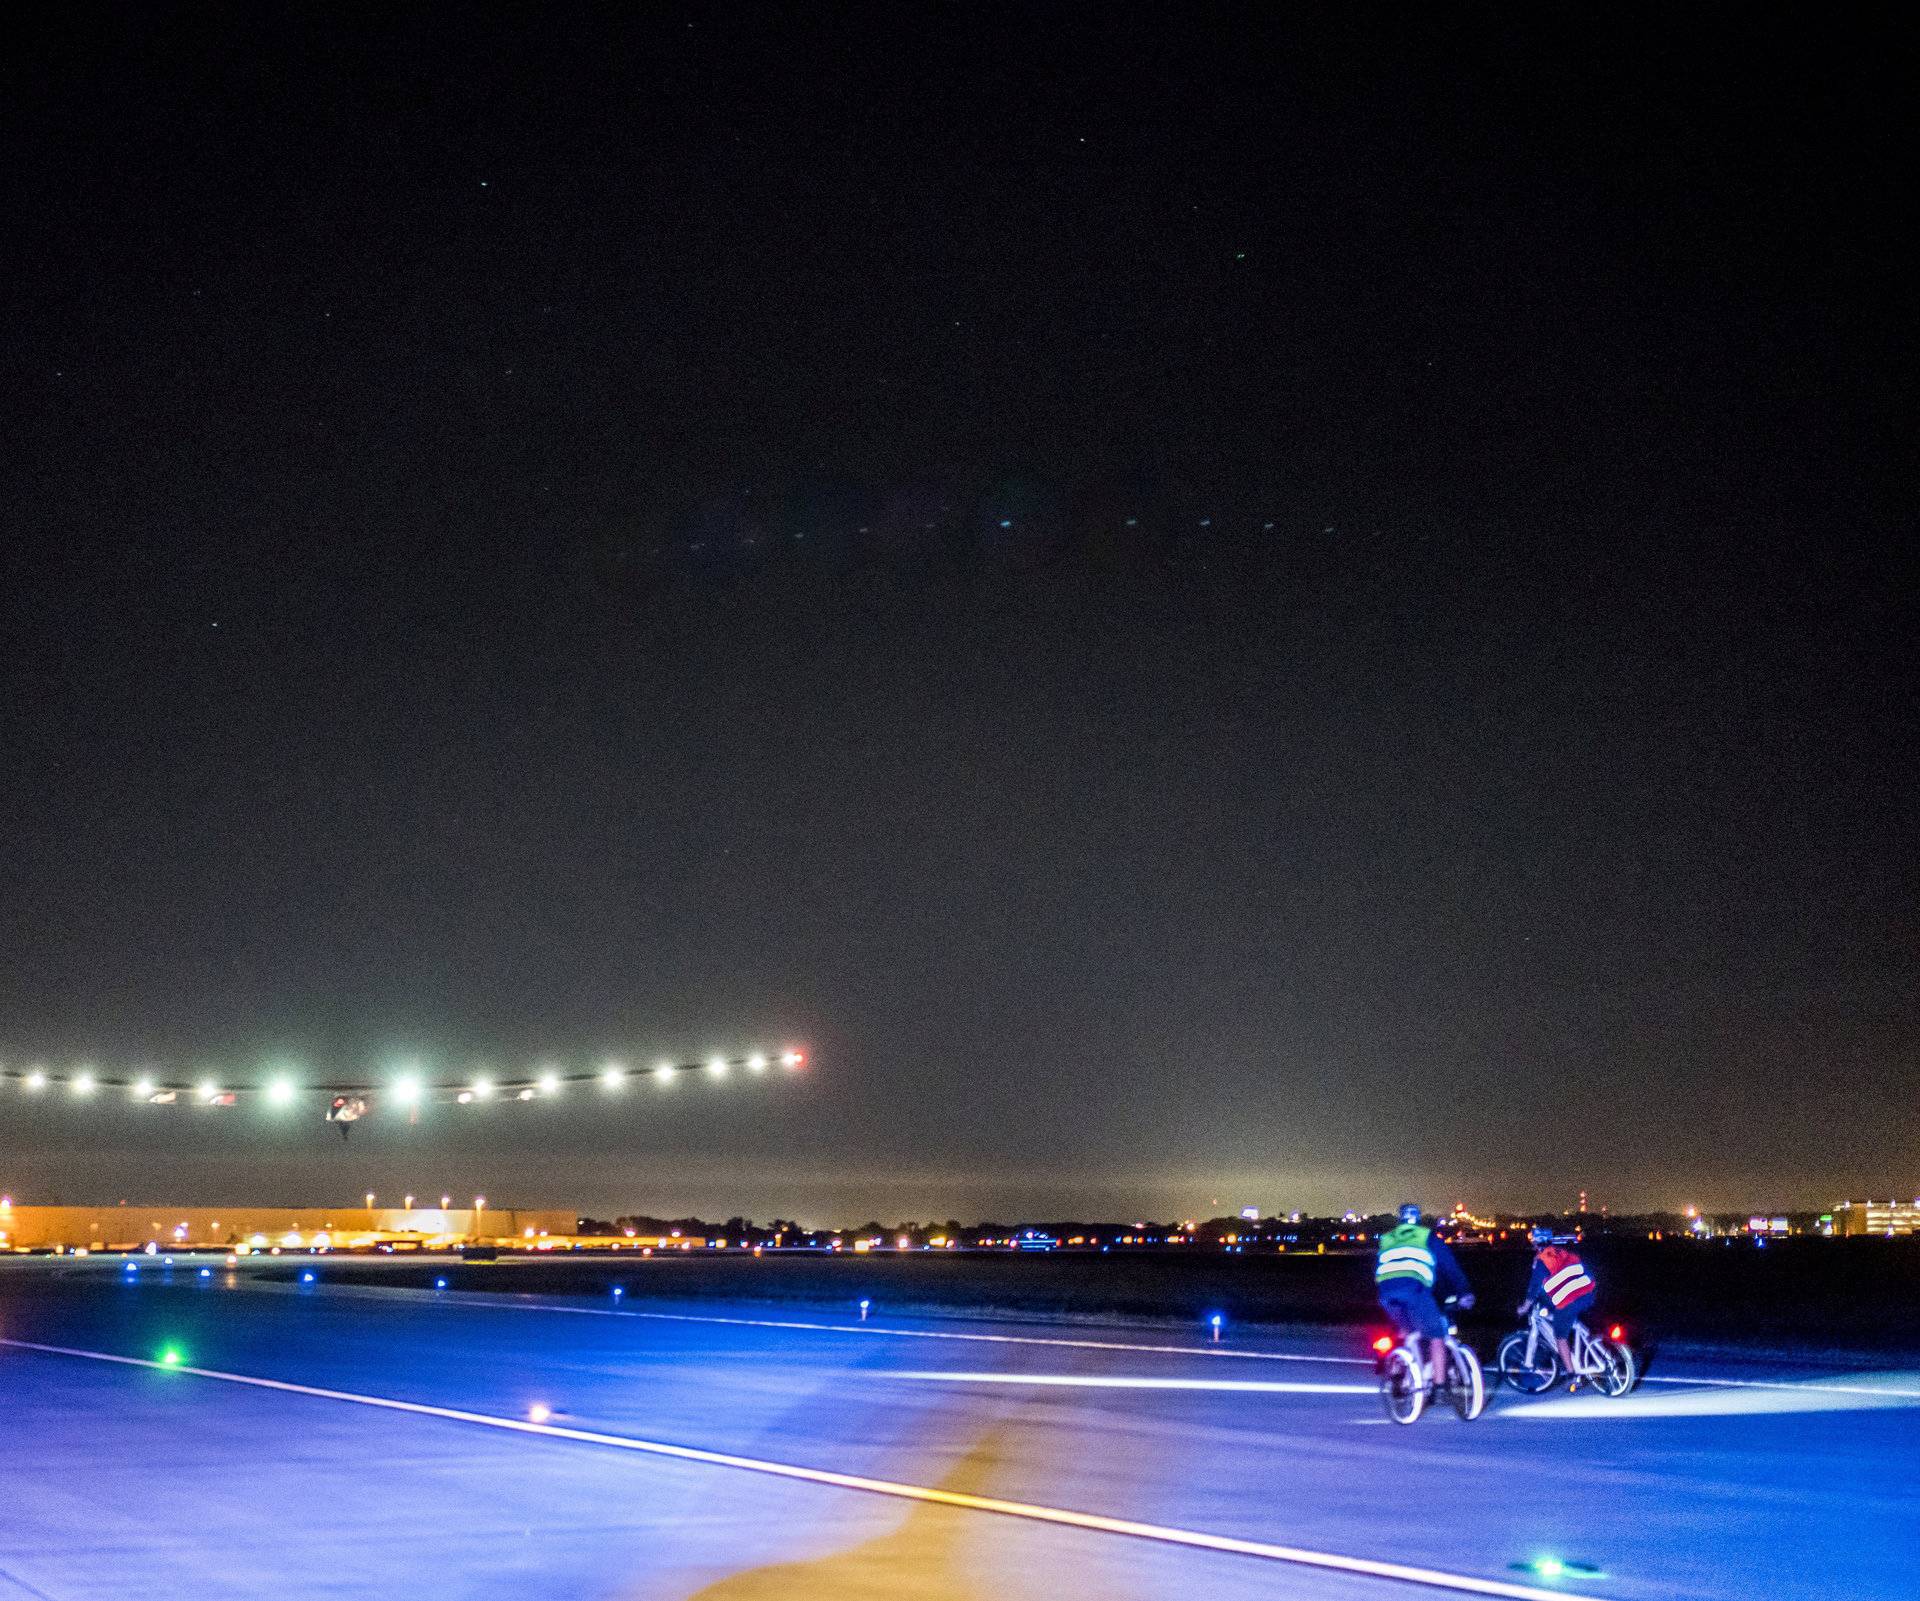 Solar Impulse 2, a solar-powered plane, lands at Tulsa International Airport